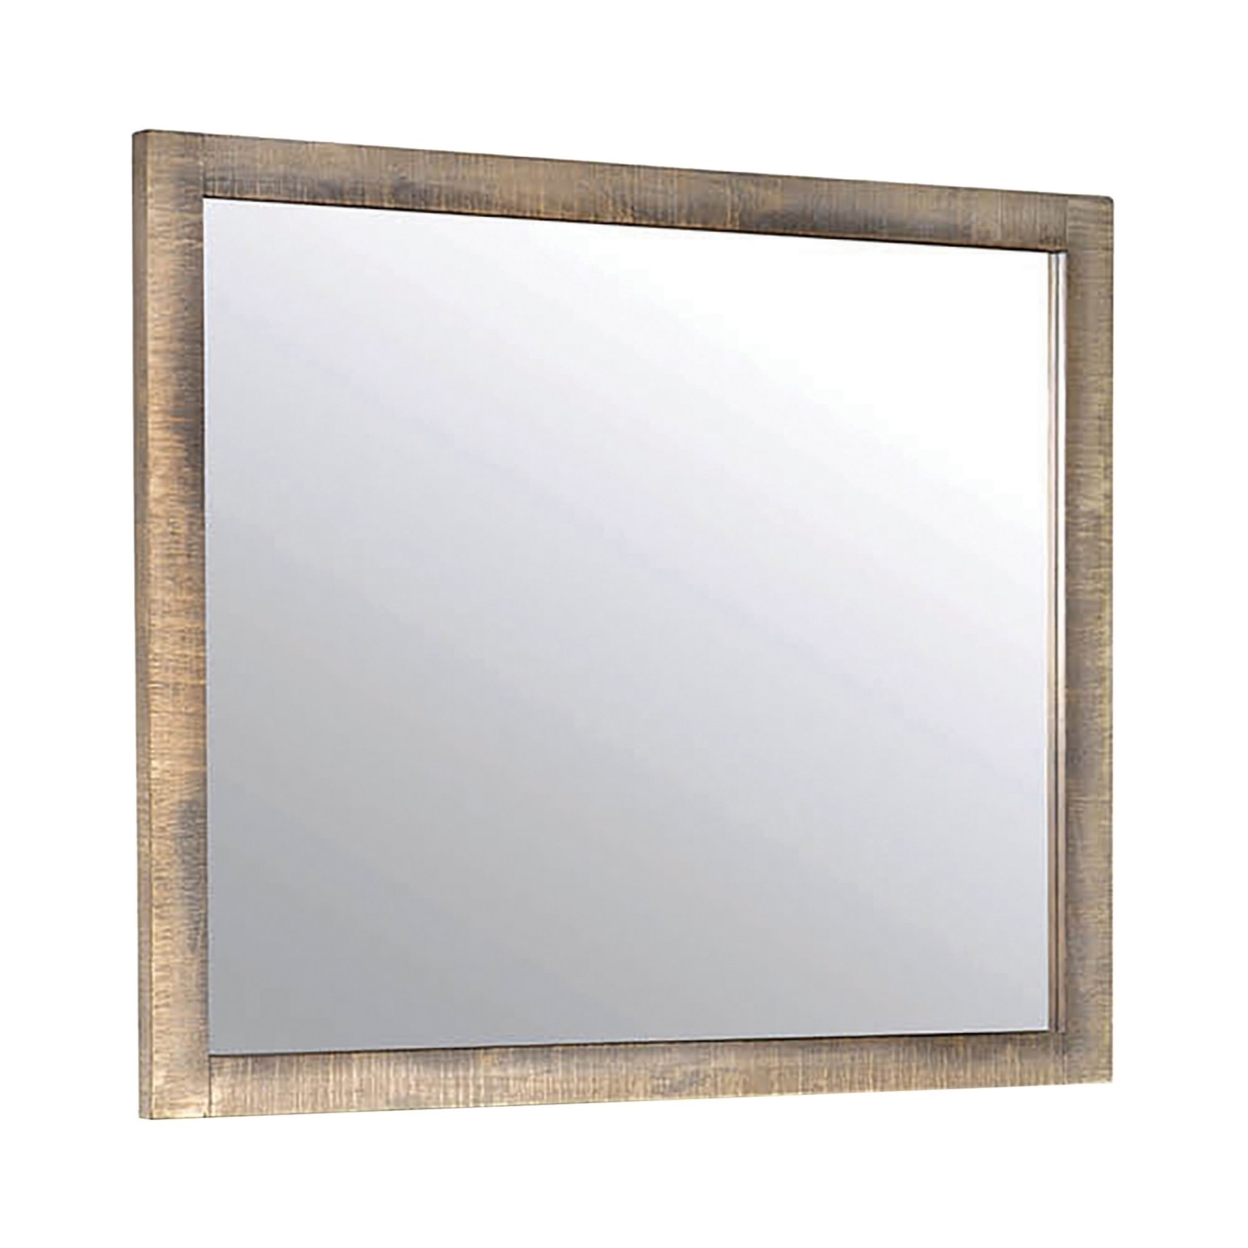 Rectangular Mirror With Rough Hewn Saw Texture, Brown- Saltoro Sherpi